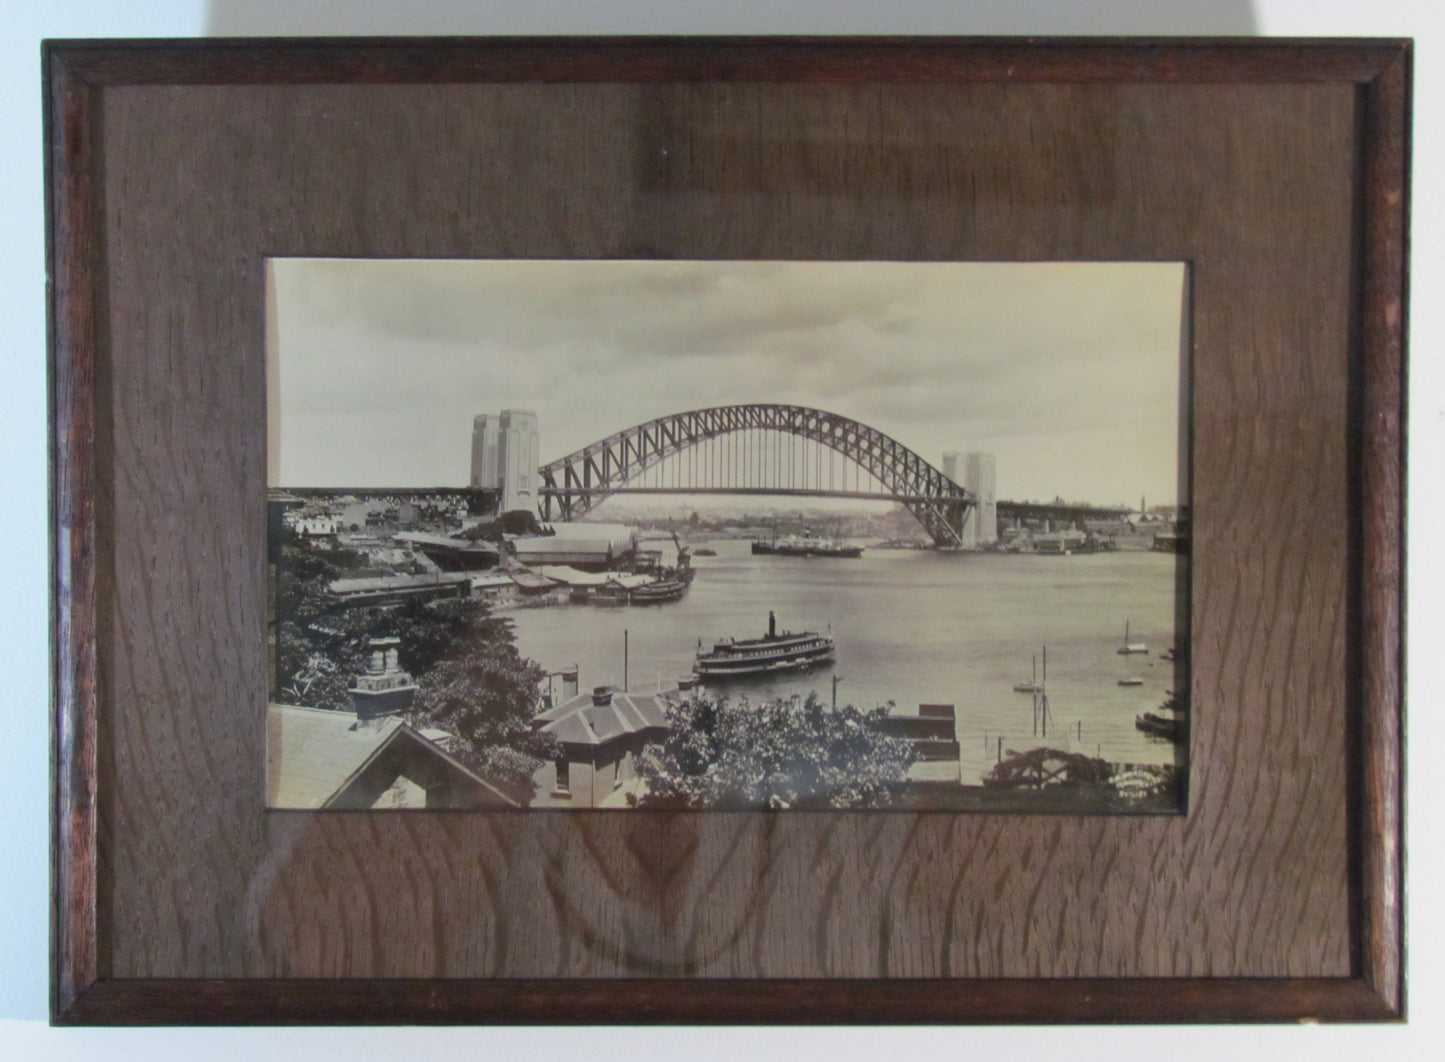 B A Bradford Photograph of Sydney Harbour Bridge circa 1930's